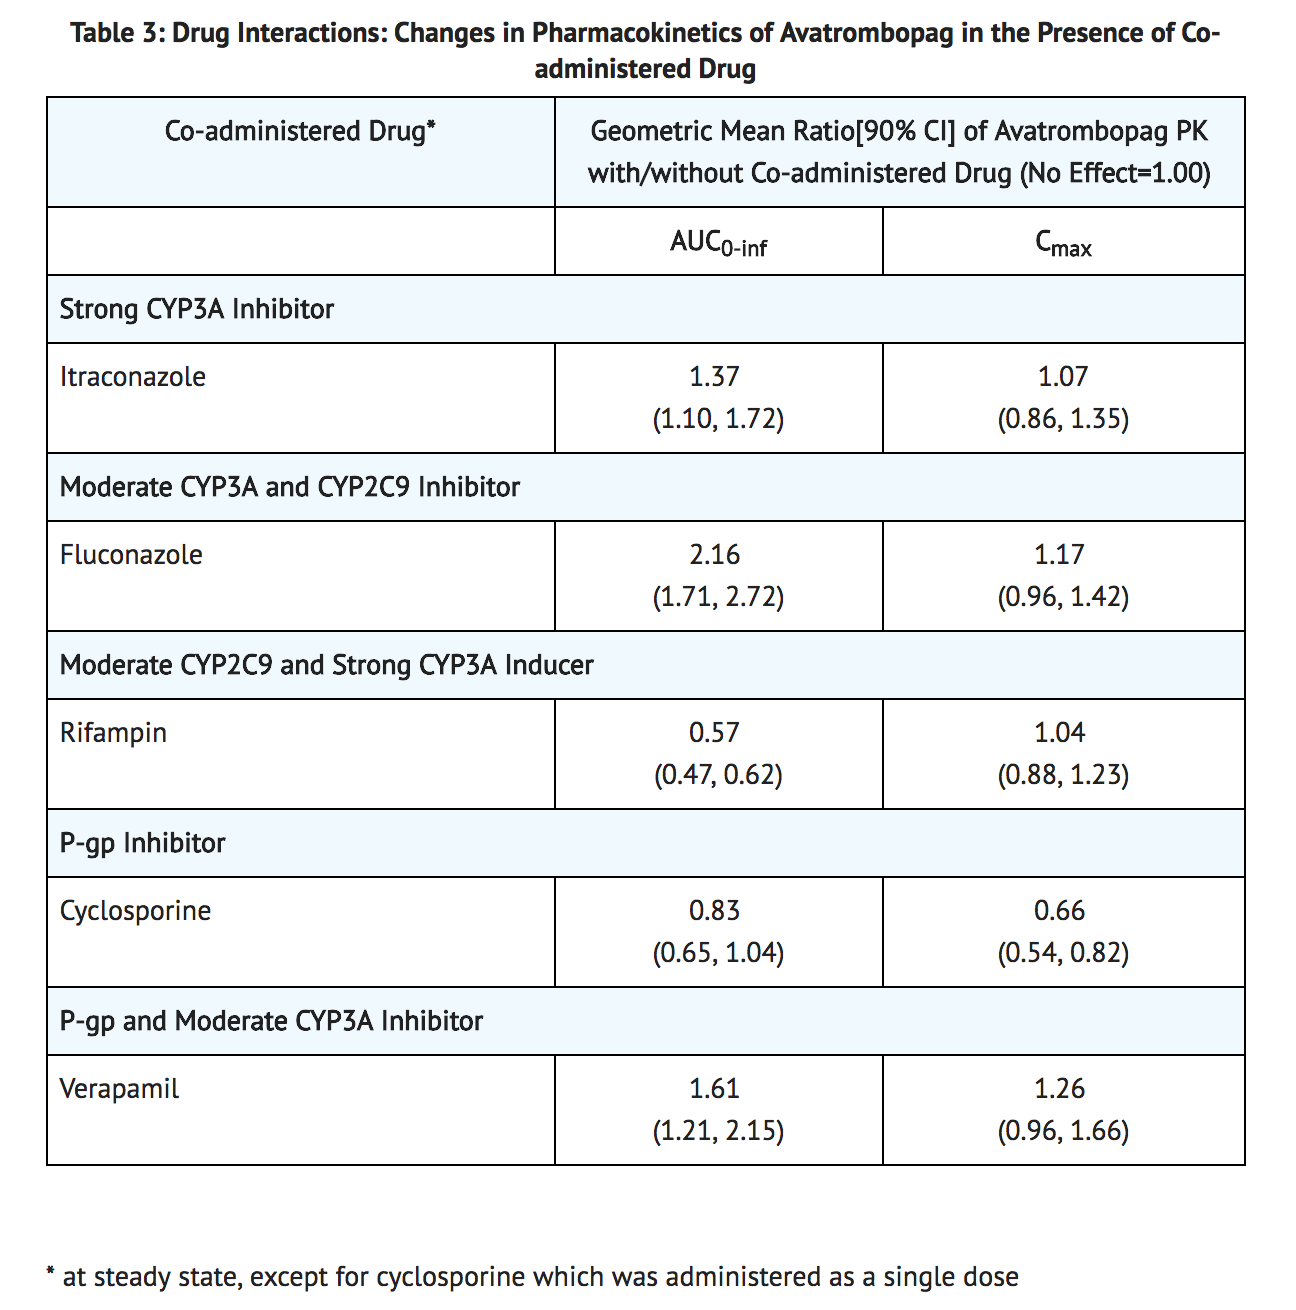 File:Avatrombopag Pharmacokinetics Table.png